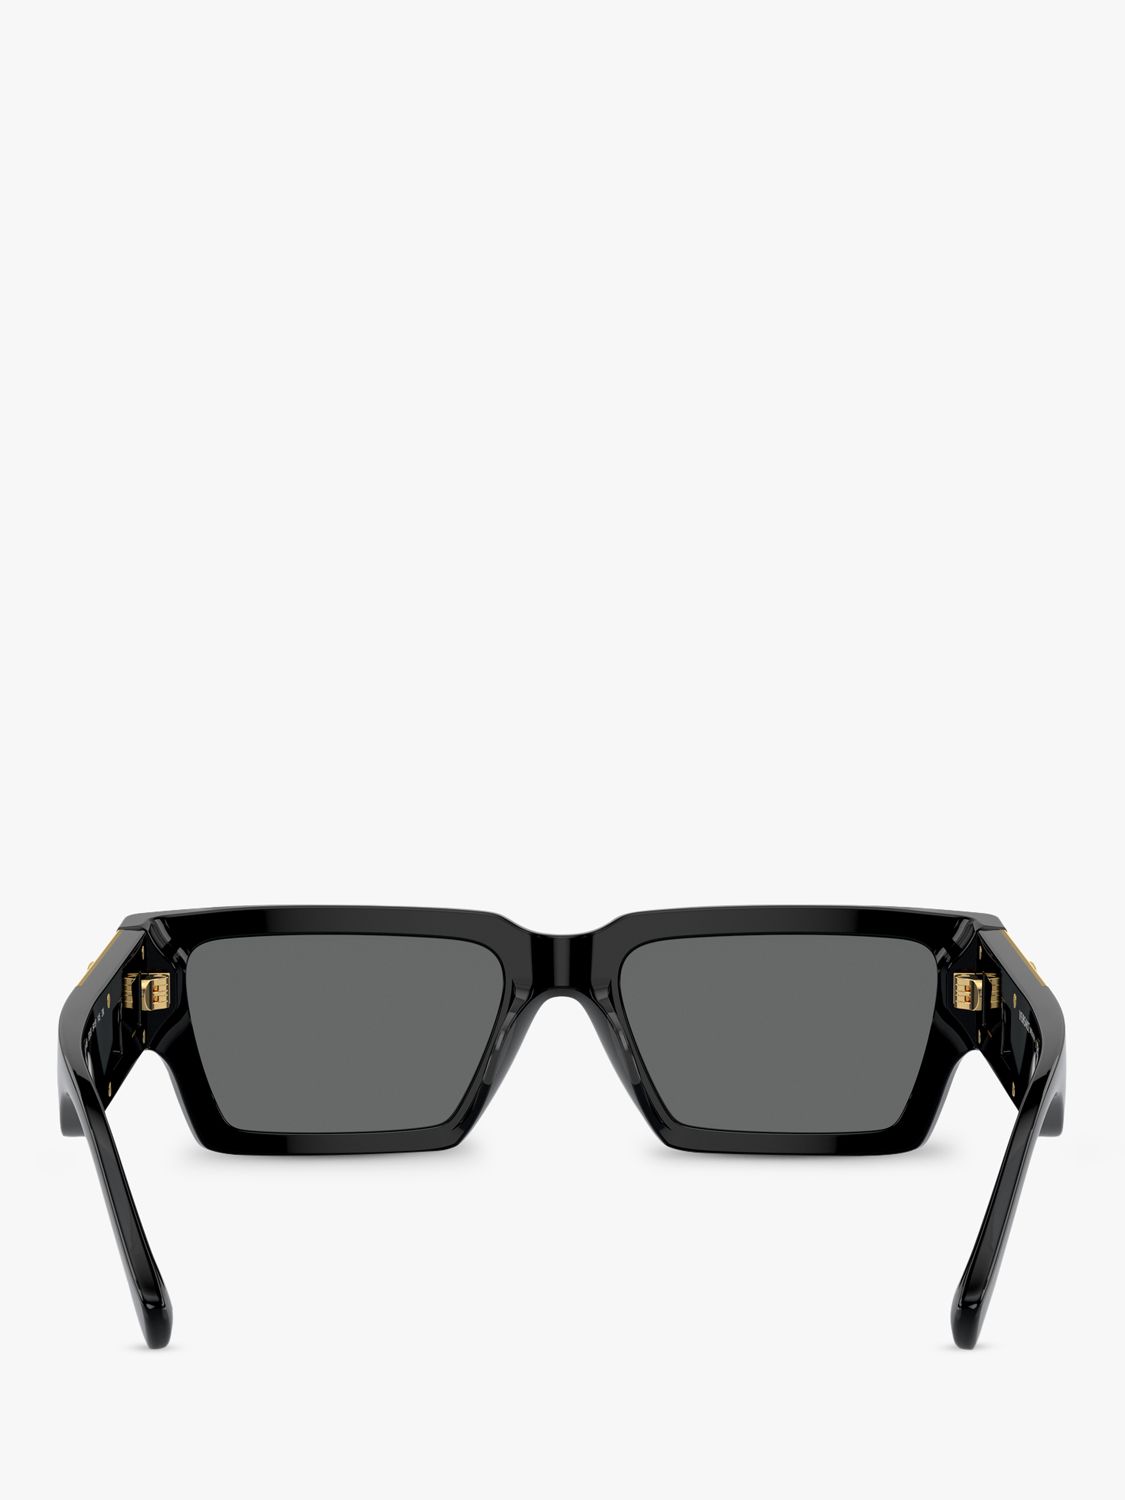 Versace VE4459 Unisex Rectangular Sunglasses, Black/Grey